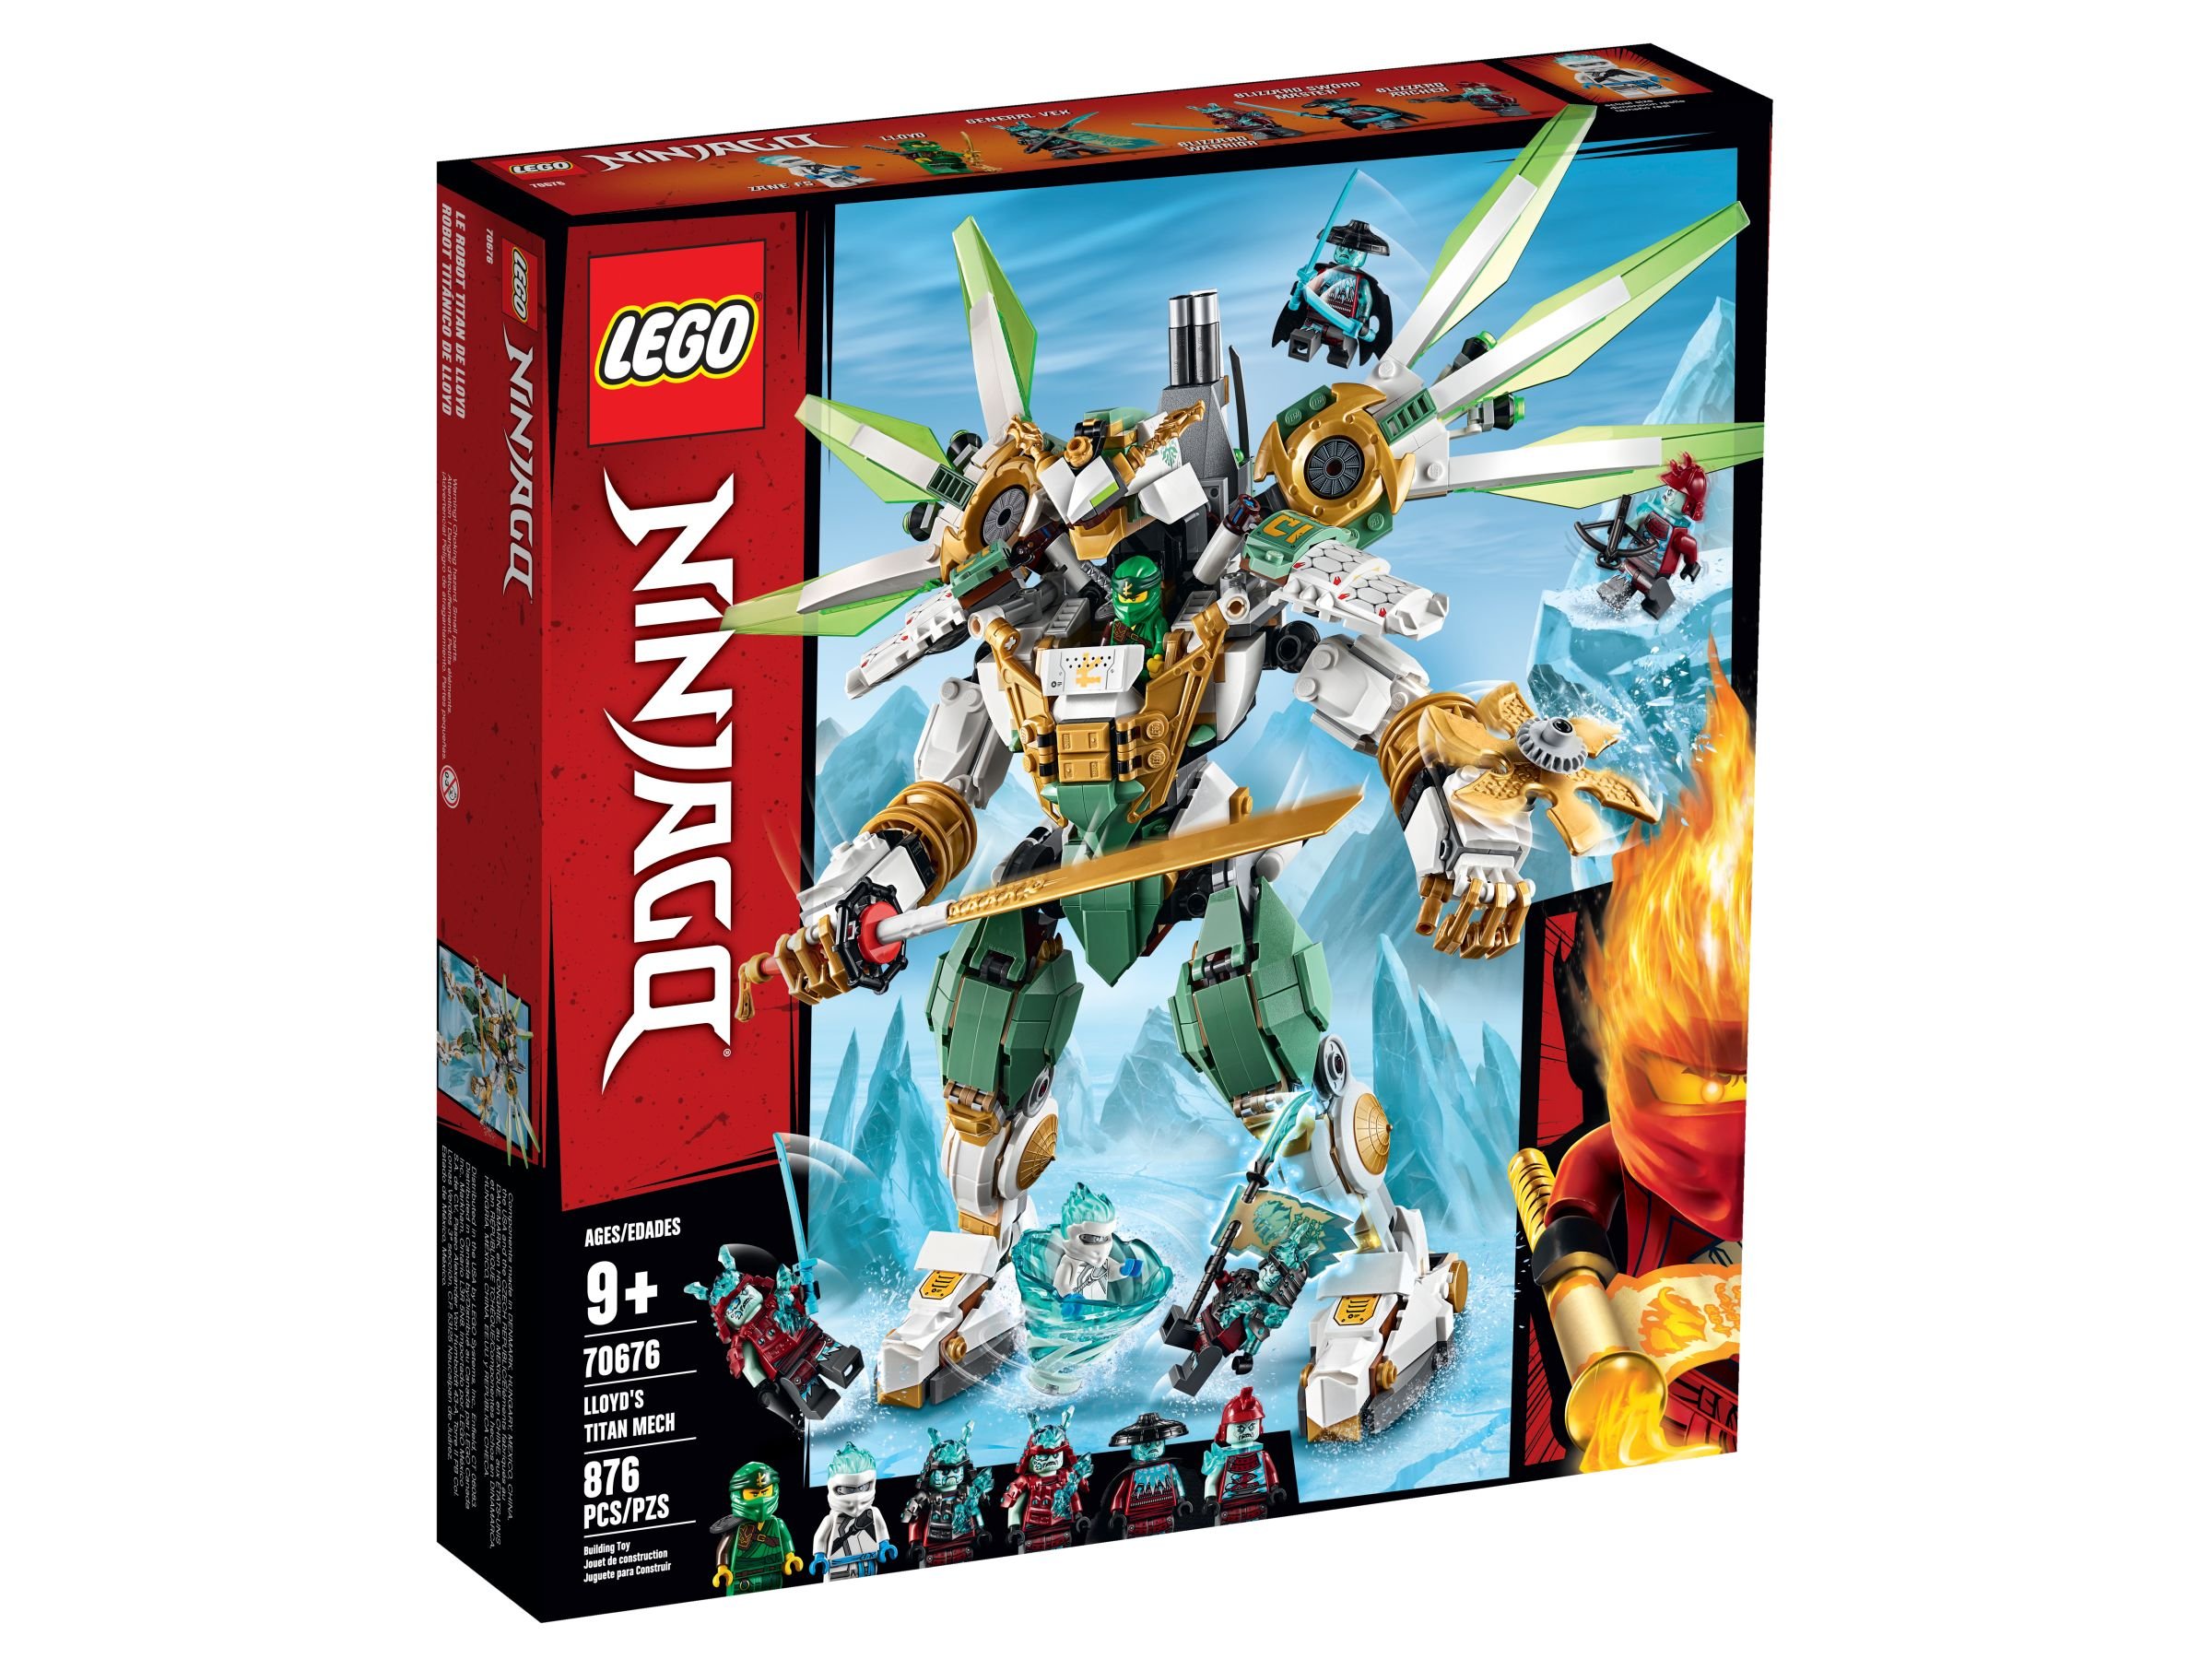 LEGO Ninjago 70676 Lloyds Titan-Mech LEGO_70676_alt1.jpg